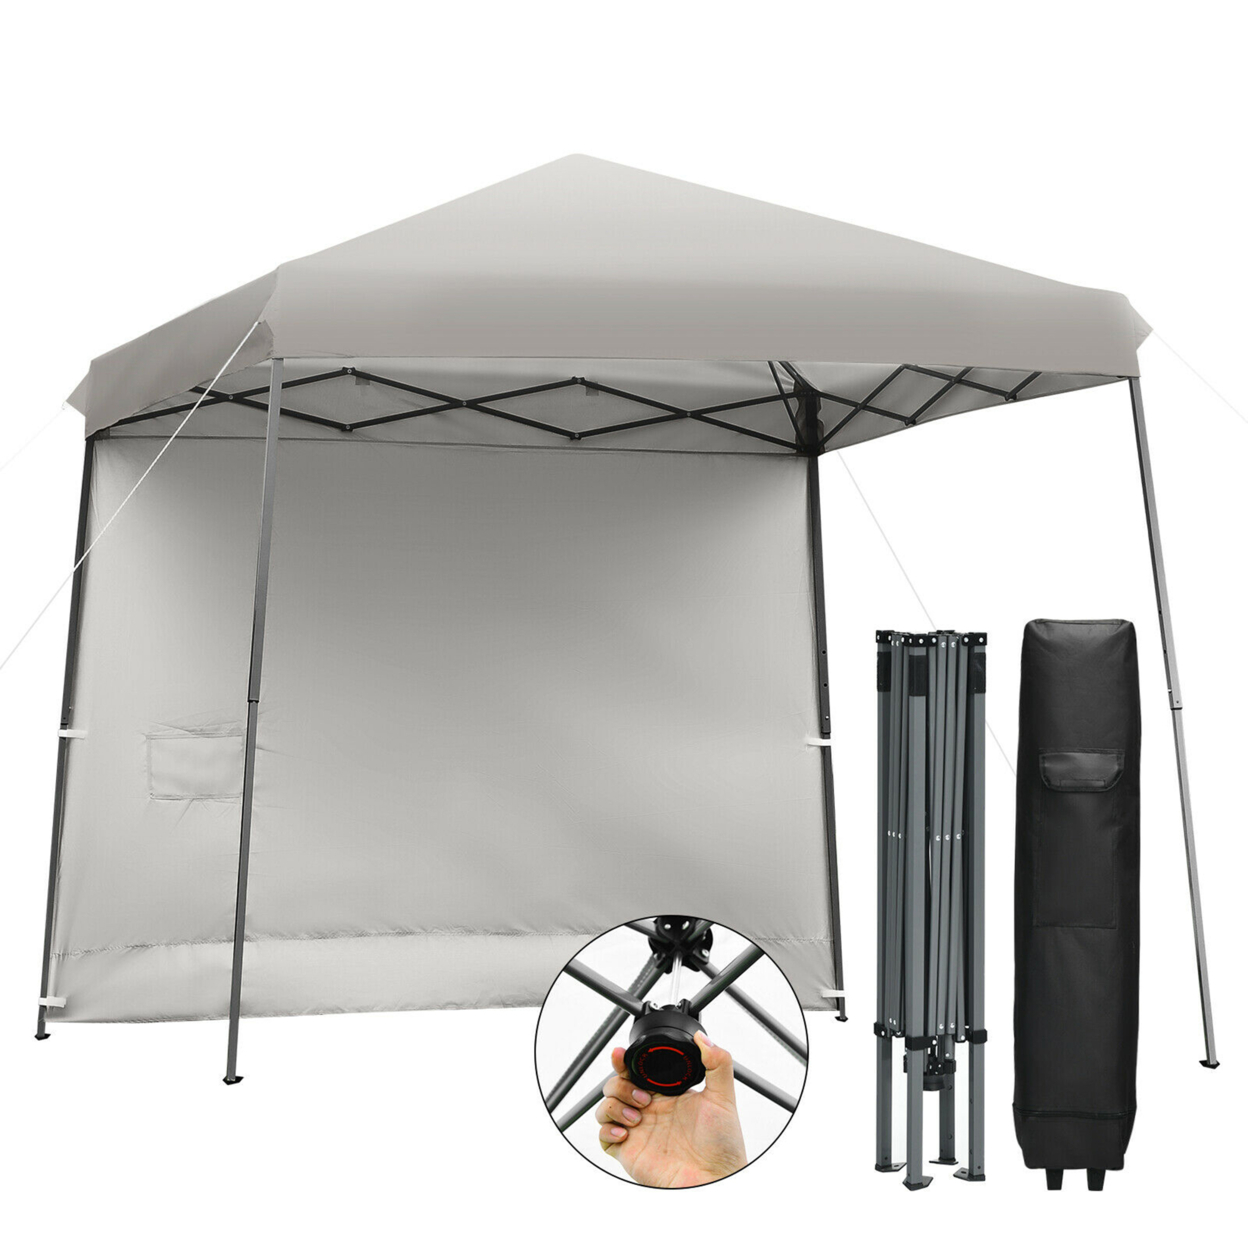 10ft X 10ft Pop Up Tent Slant Leg Canopy W/ Roll-up Side Wall - Grey